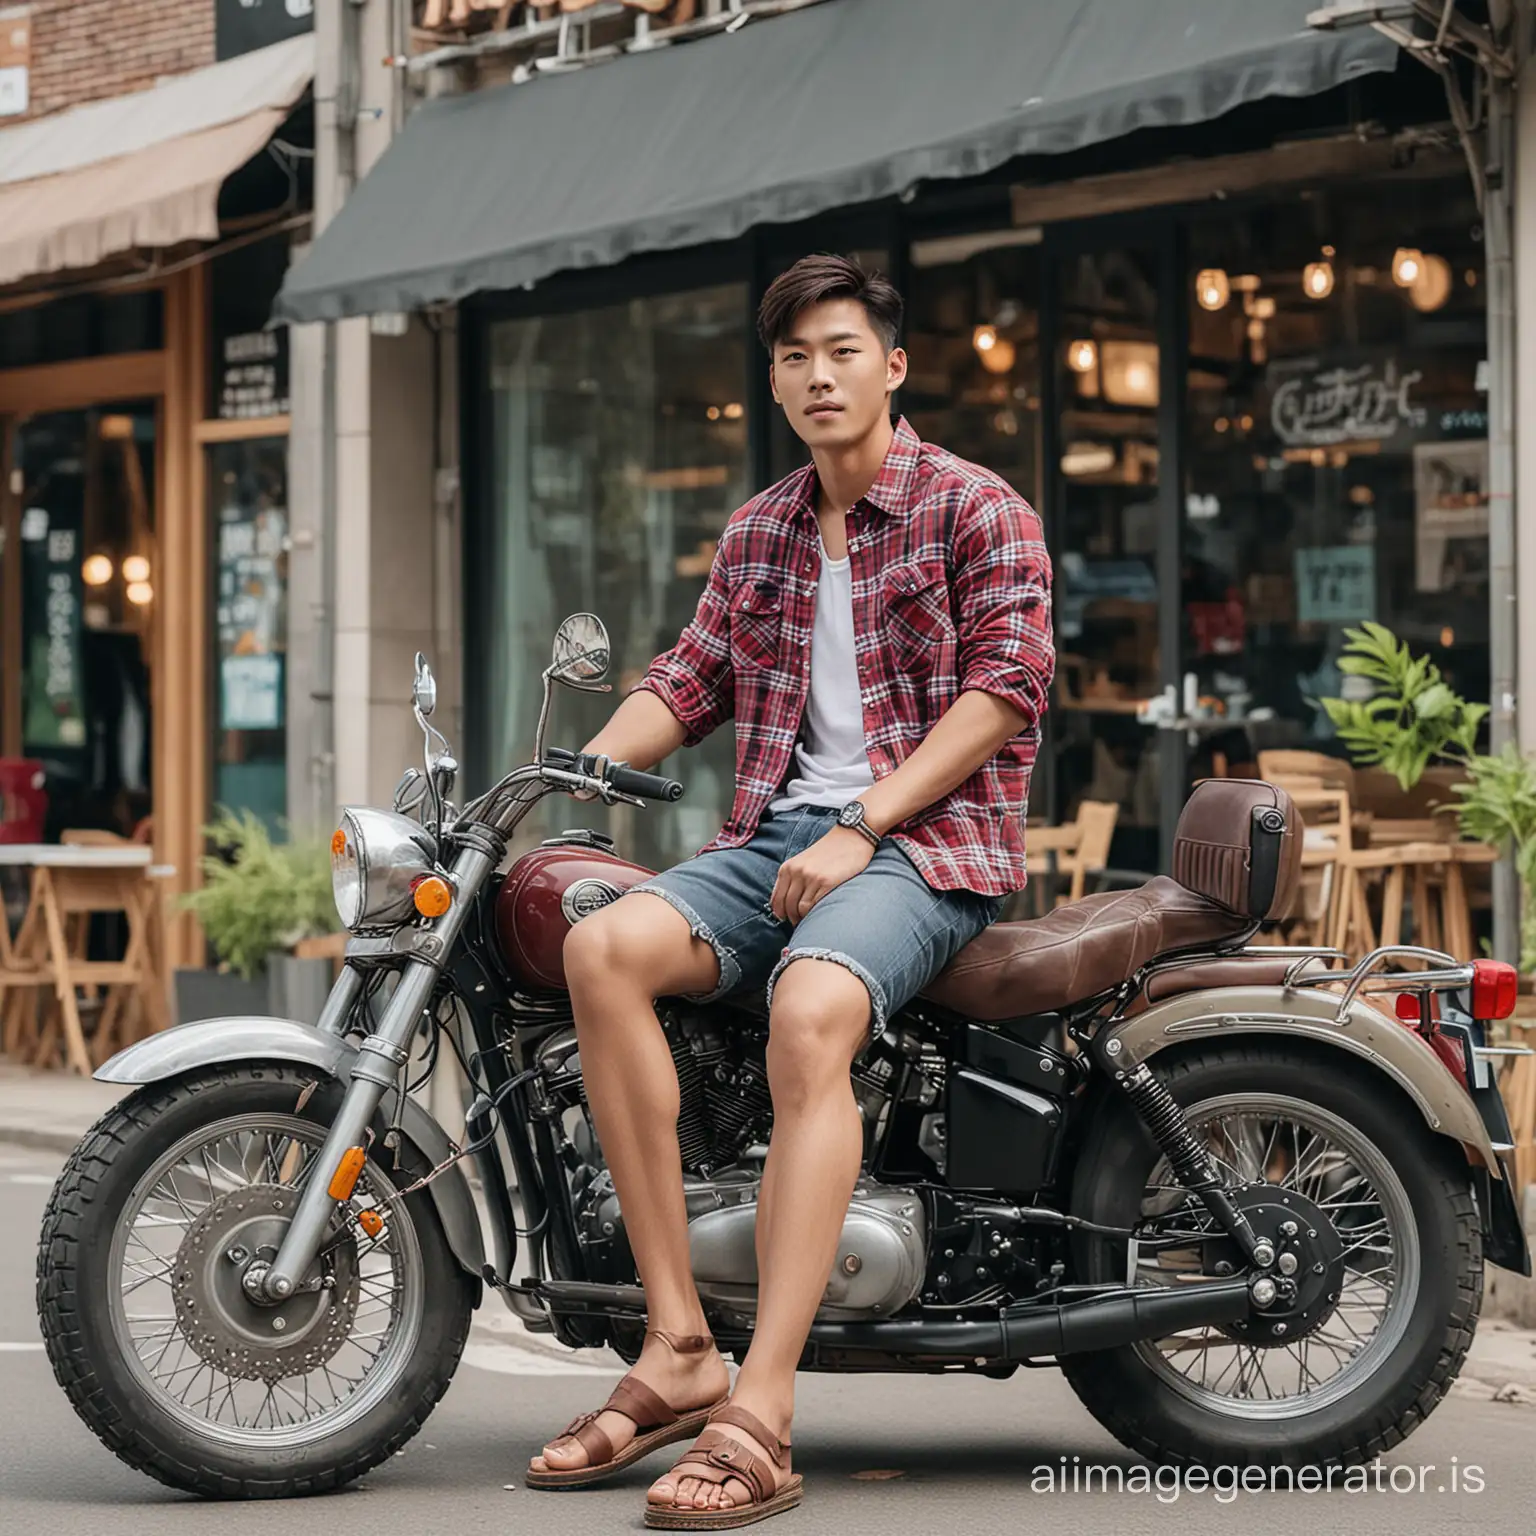 Stylish-Asian-Man-on-Motorcycle-at-Cafe